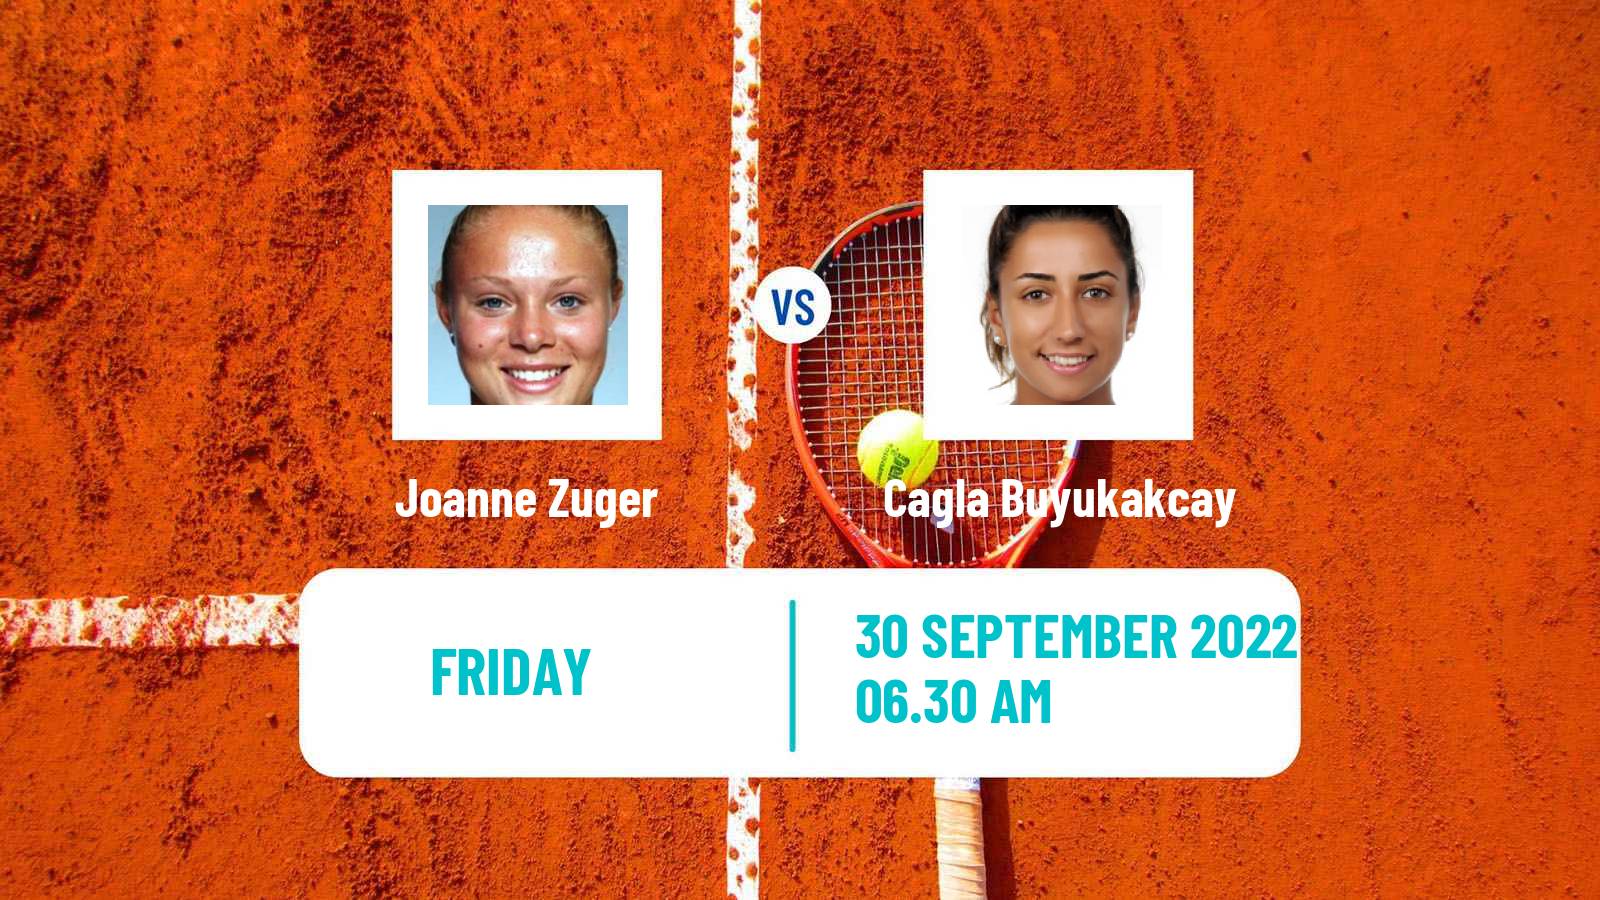 Tennis ITF Tournaments Joanne Zuger - Cagla Buyukakcay